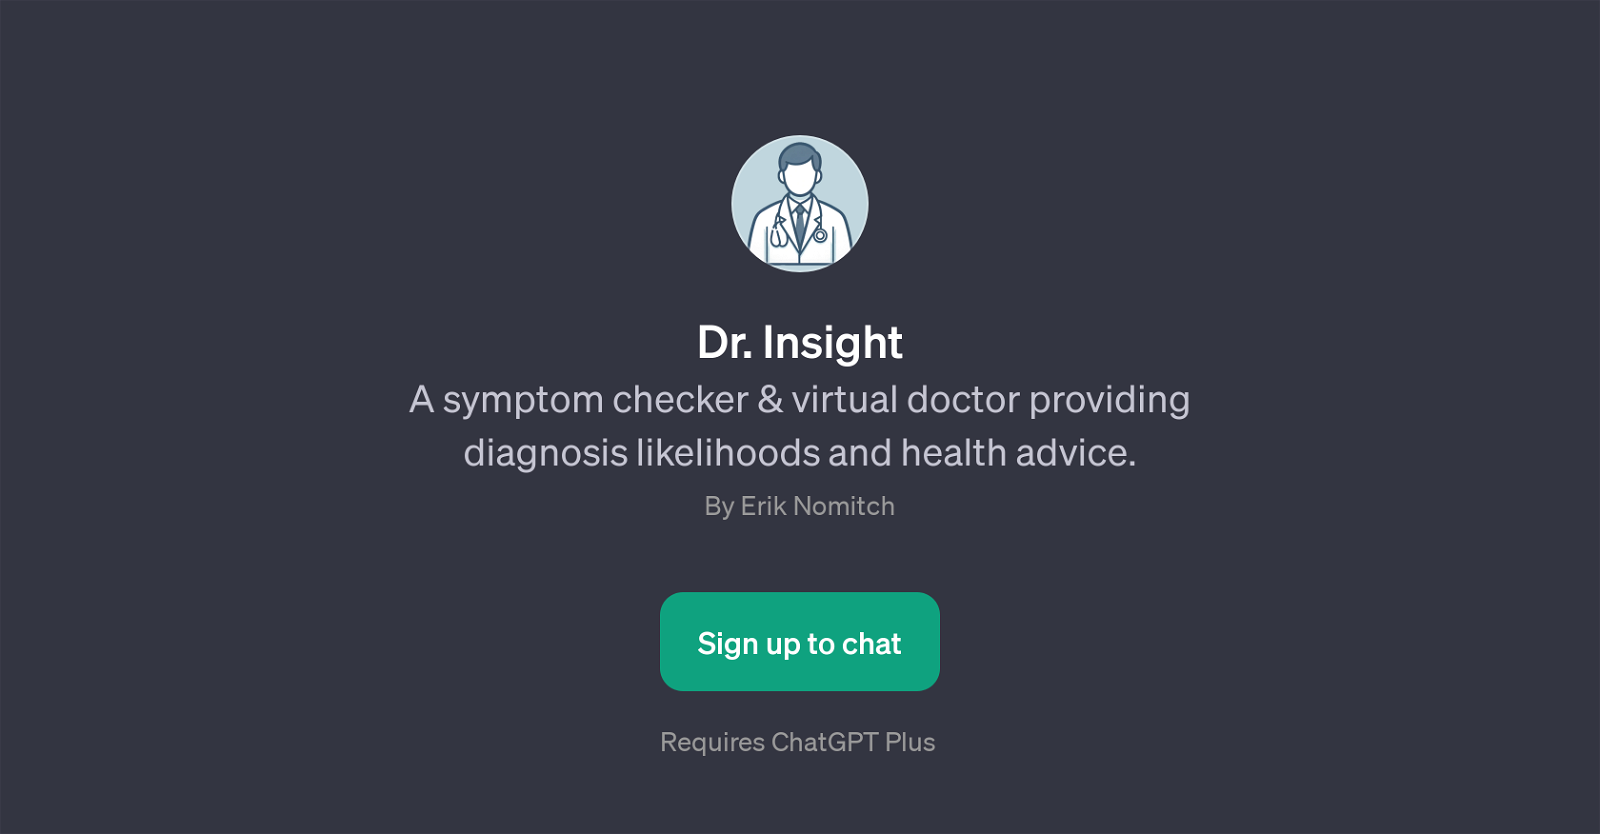 Dr. Insight website